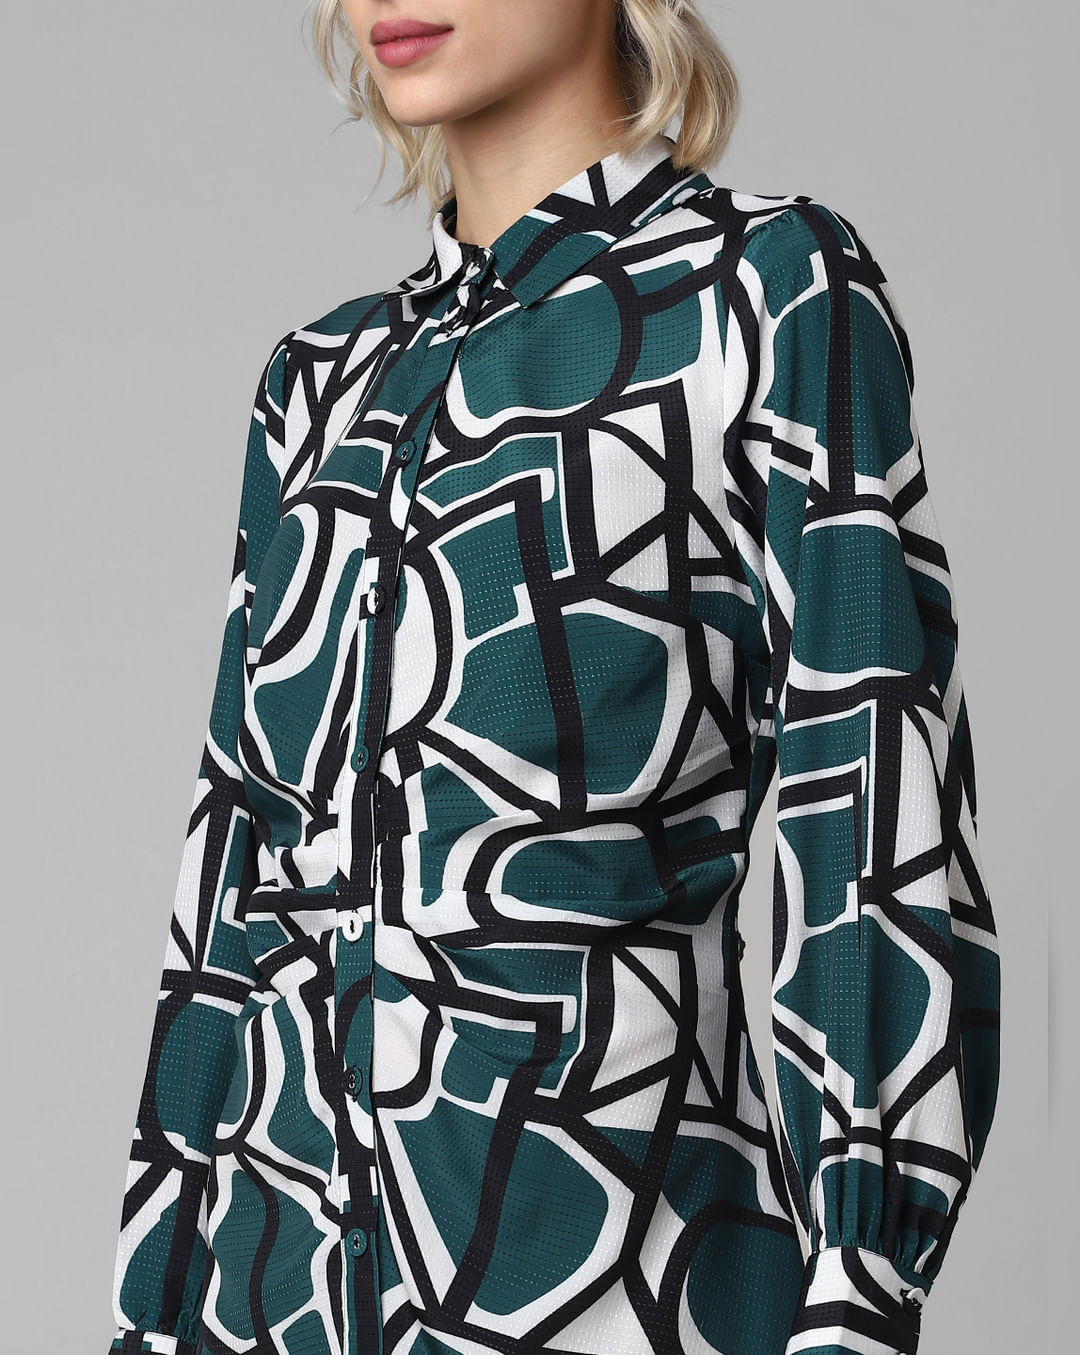 NWT Zara Geometric Print shirt dress PINK Sz S  Printed shirt dress,  Clothes design, Fashion design